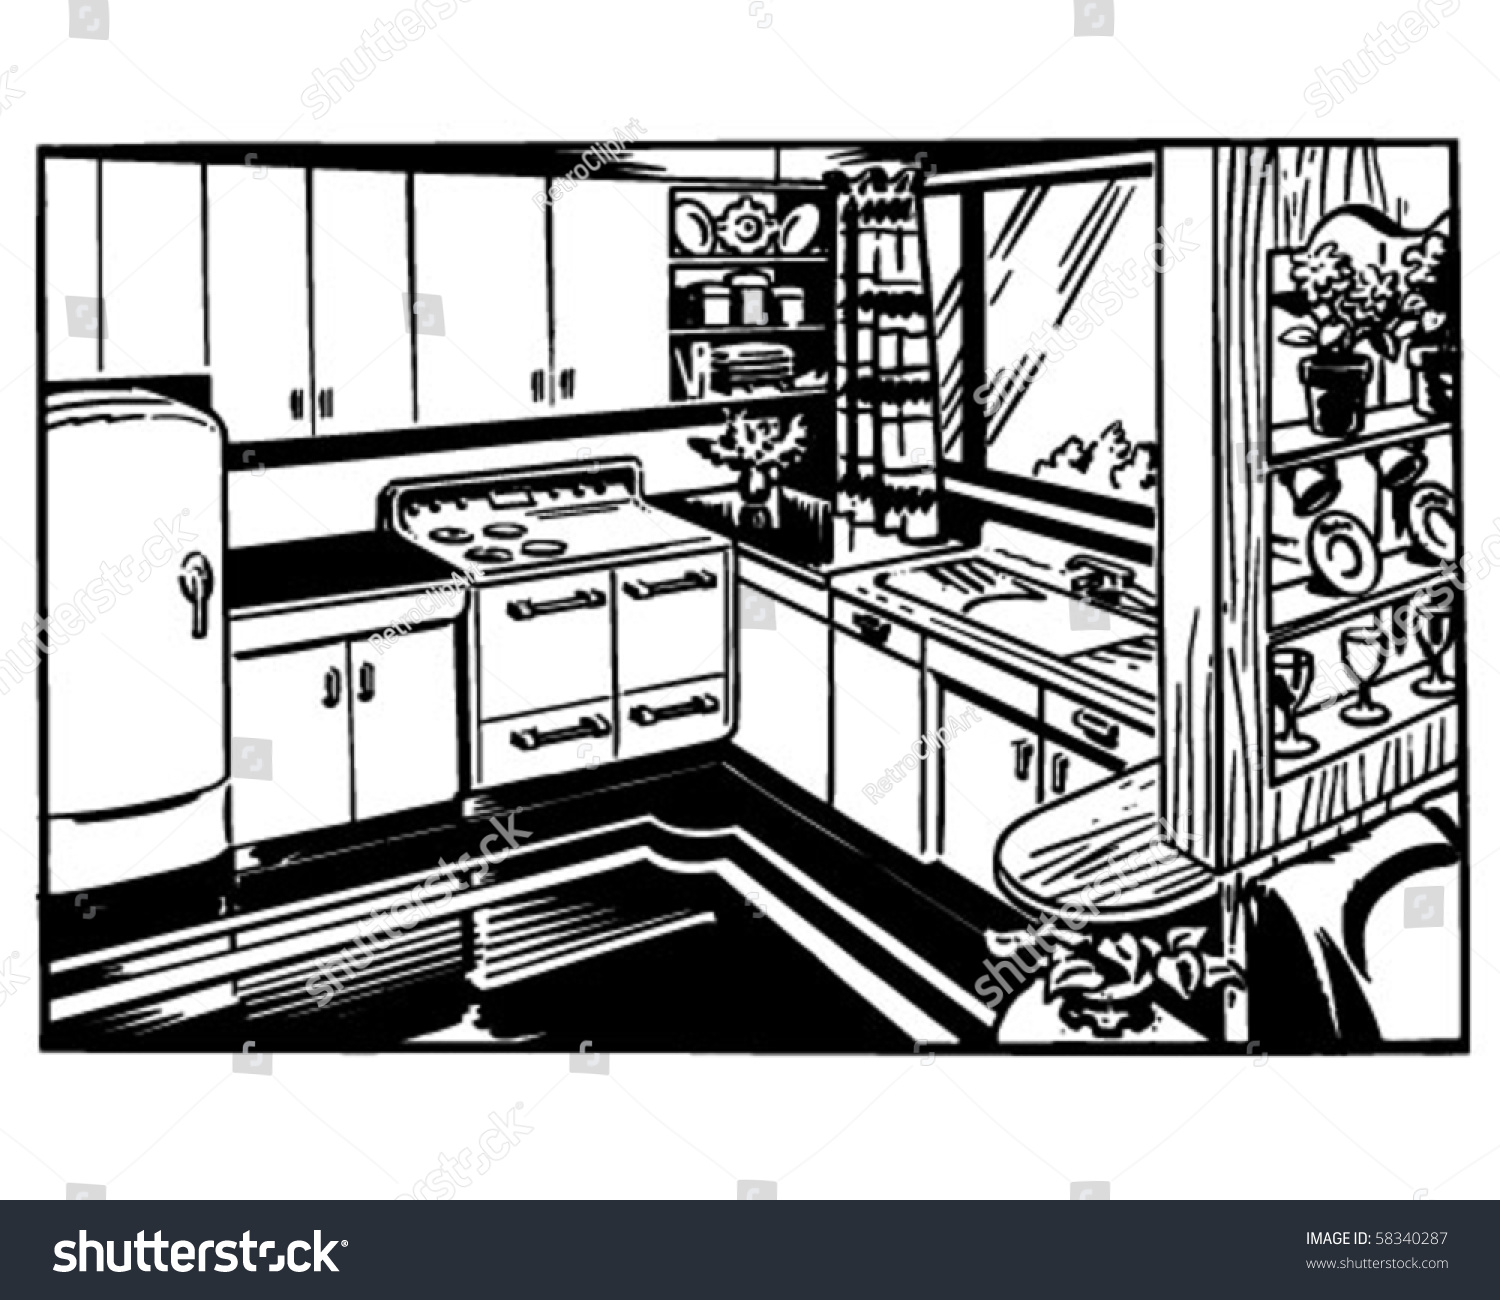 clipart of kitchen - photo #32